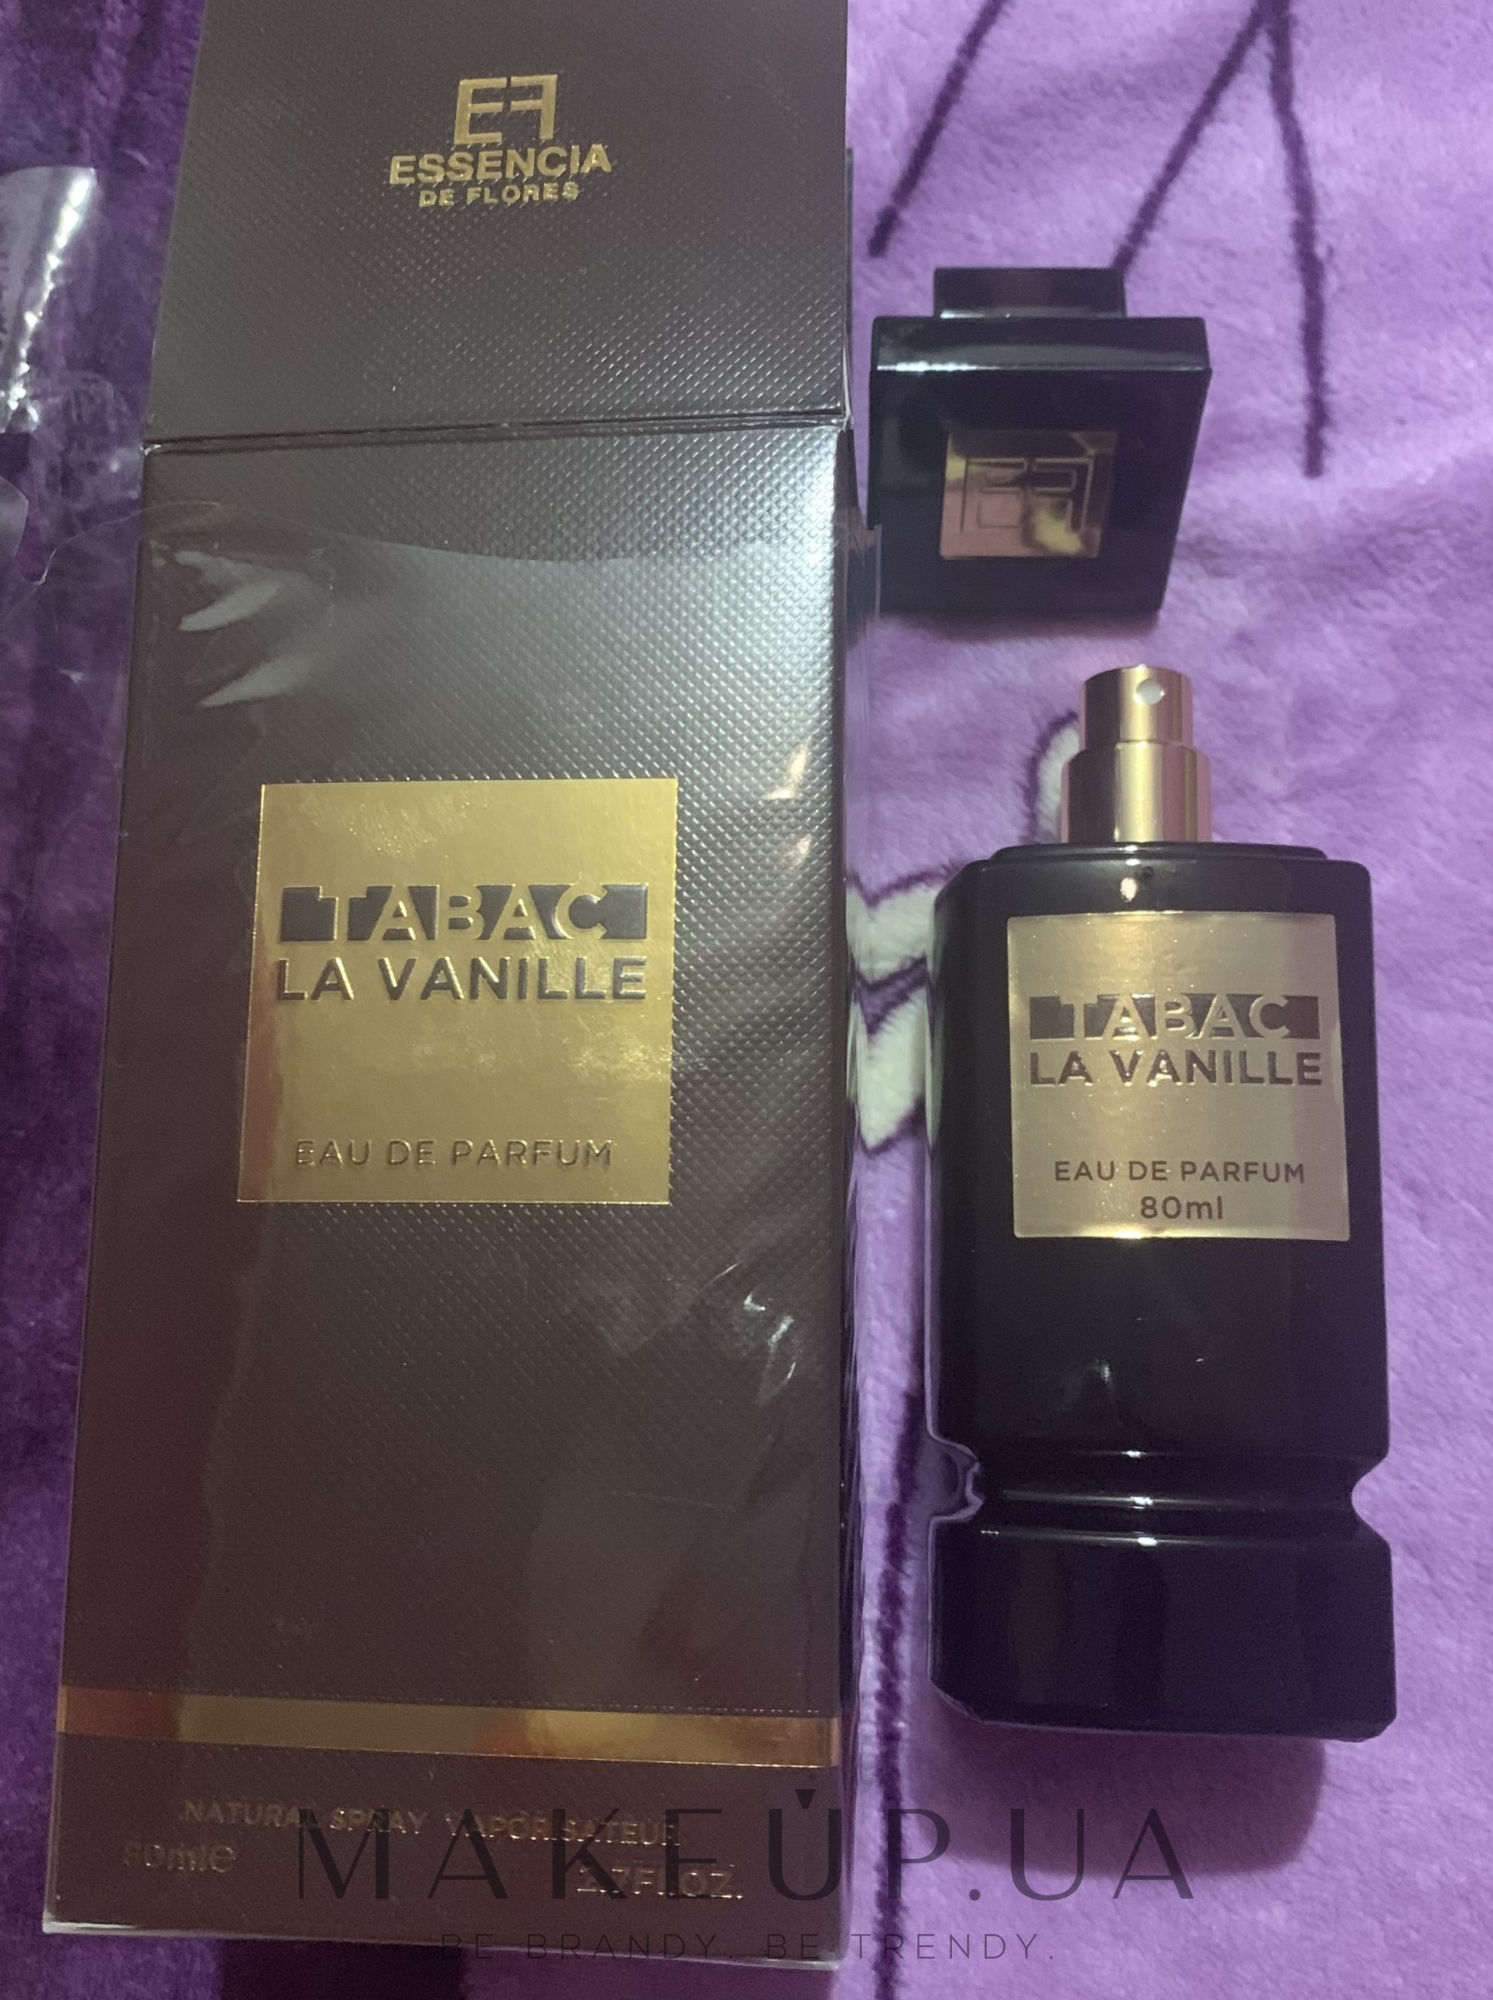 Essencia De Flores Tabac La Vanille Eau de Parfum 80 ml